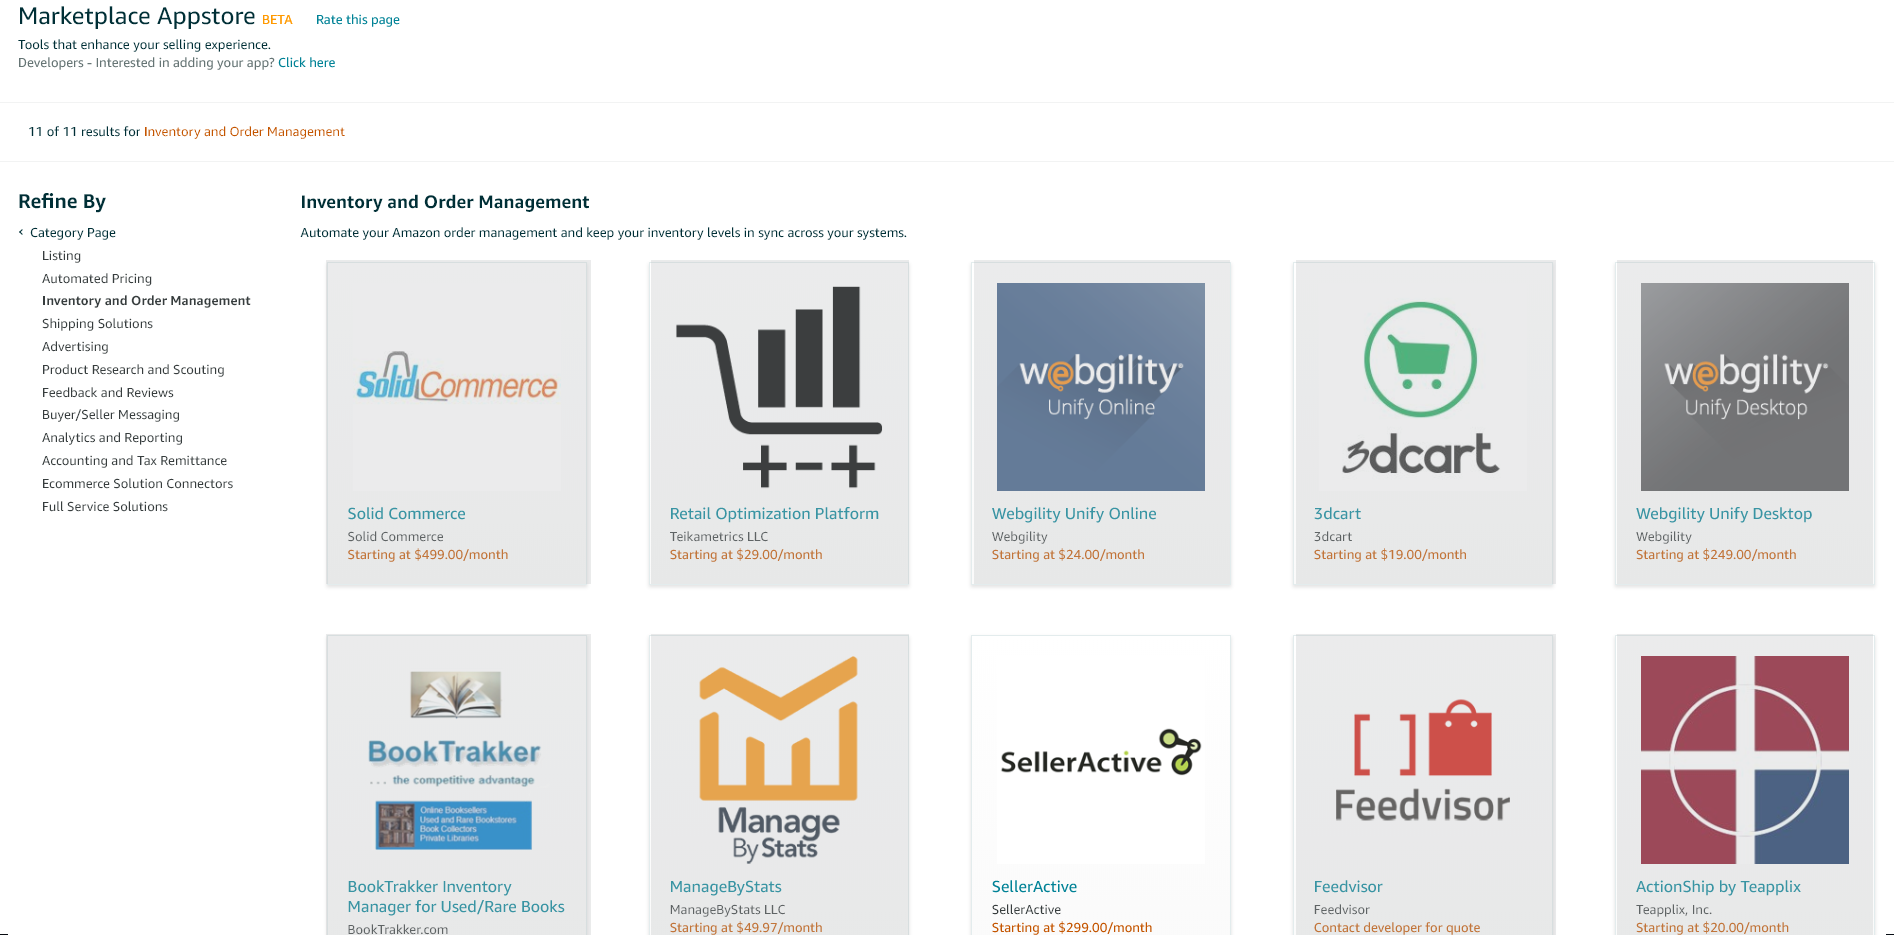 Screenshot of Amazon Marketplace Appstore